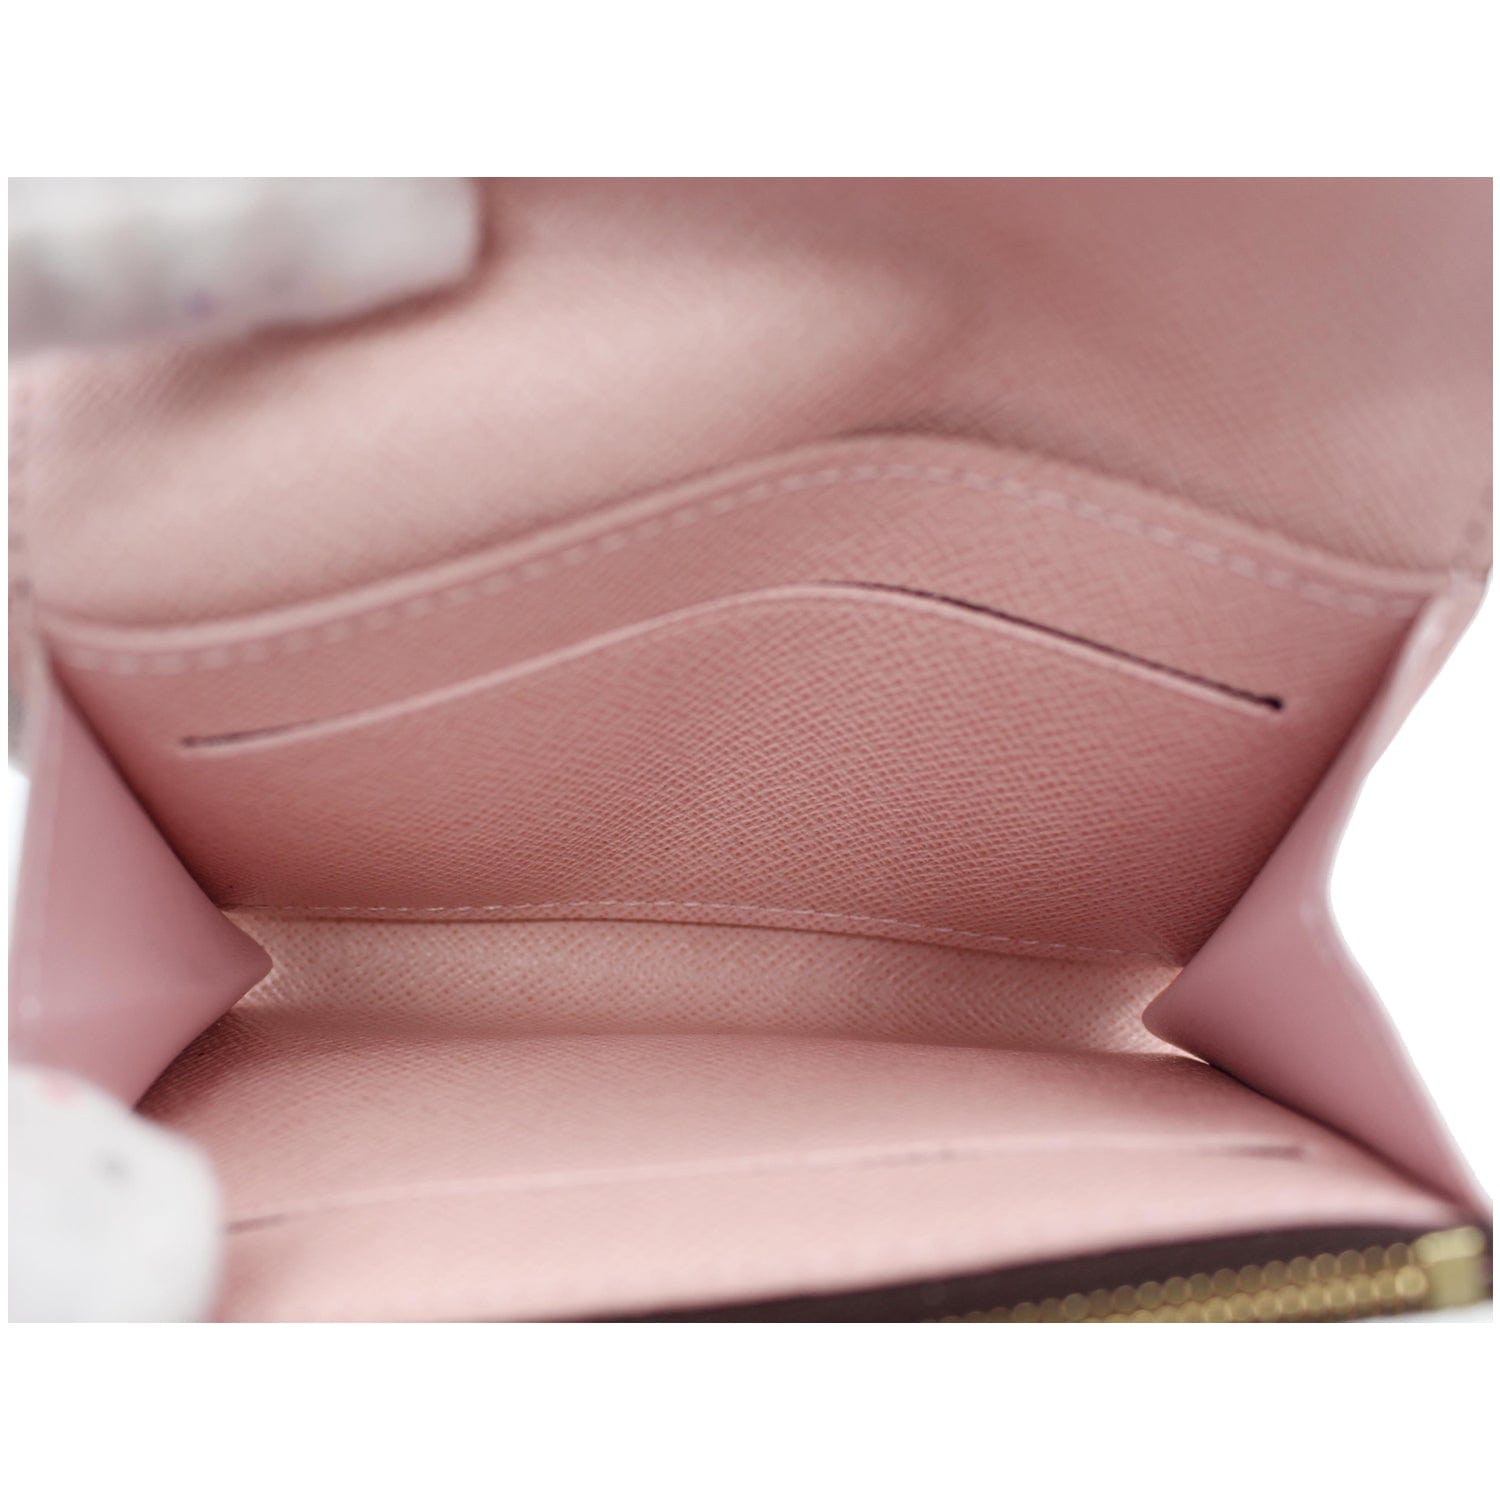 Louis Vuitton - Rosalie Coin Purse - Damier Canvas - Rose Ballerine - Women - Luxury